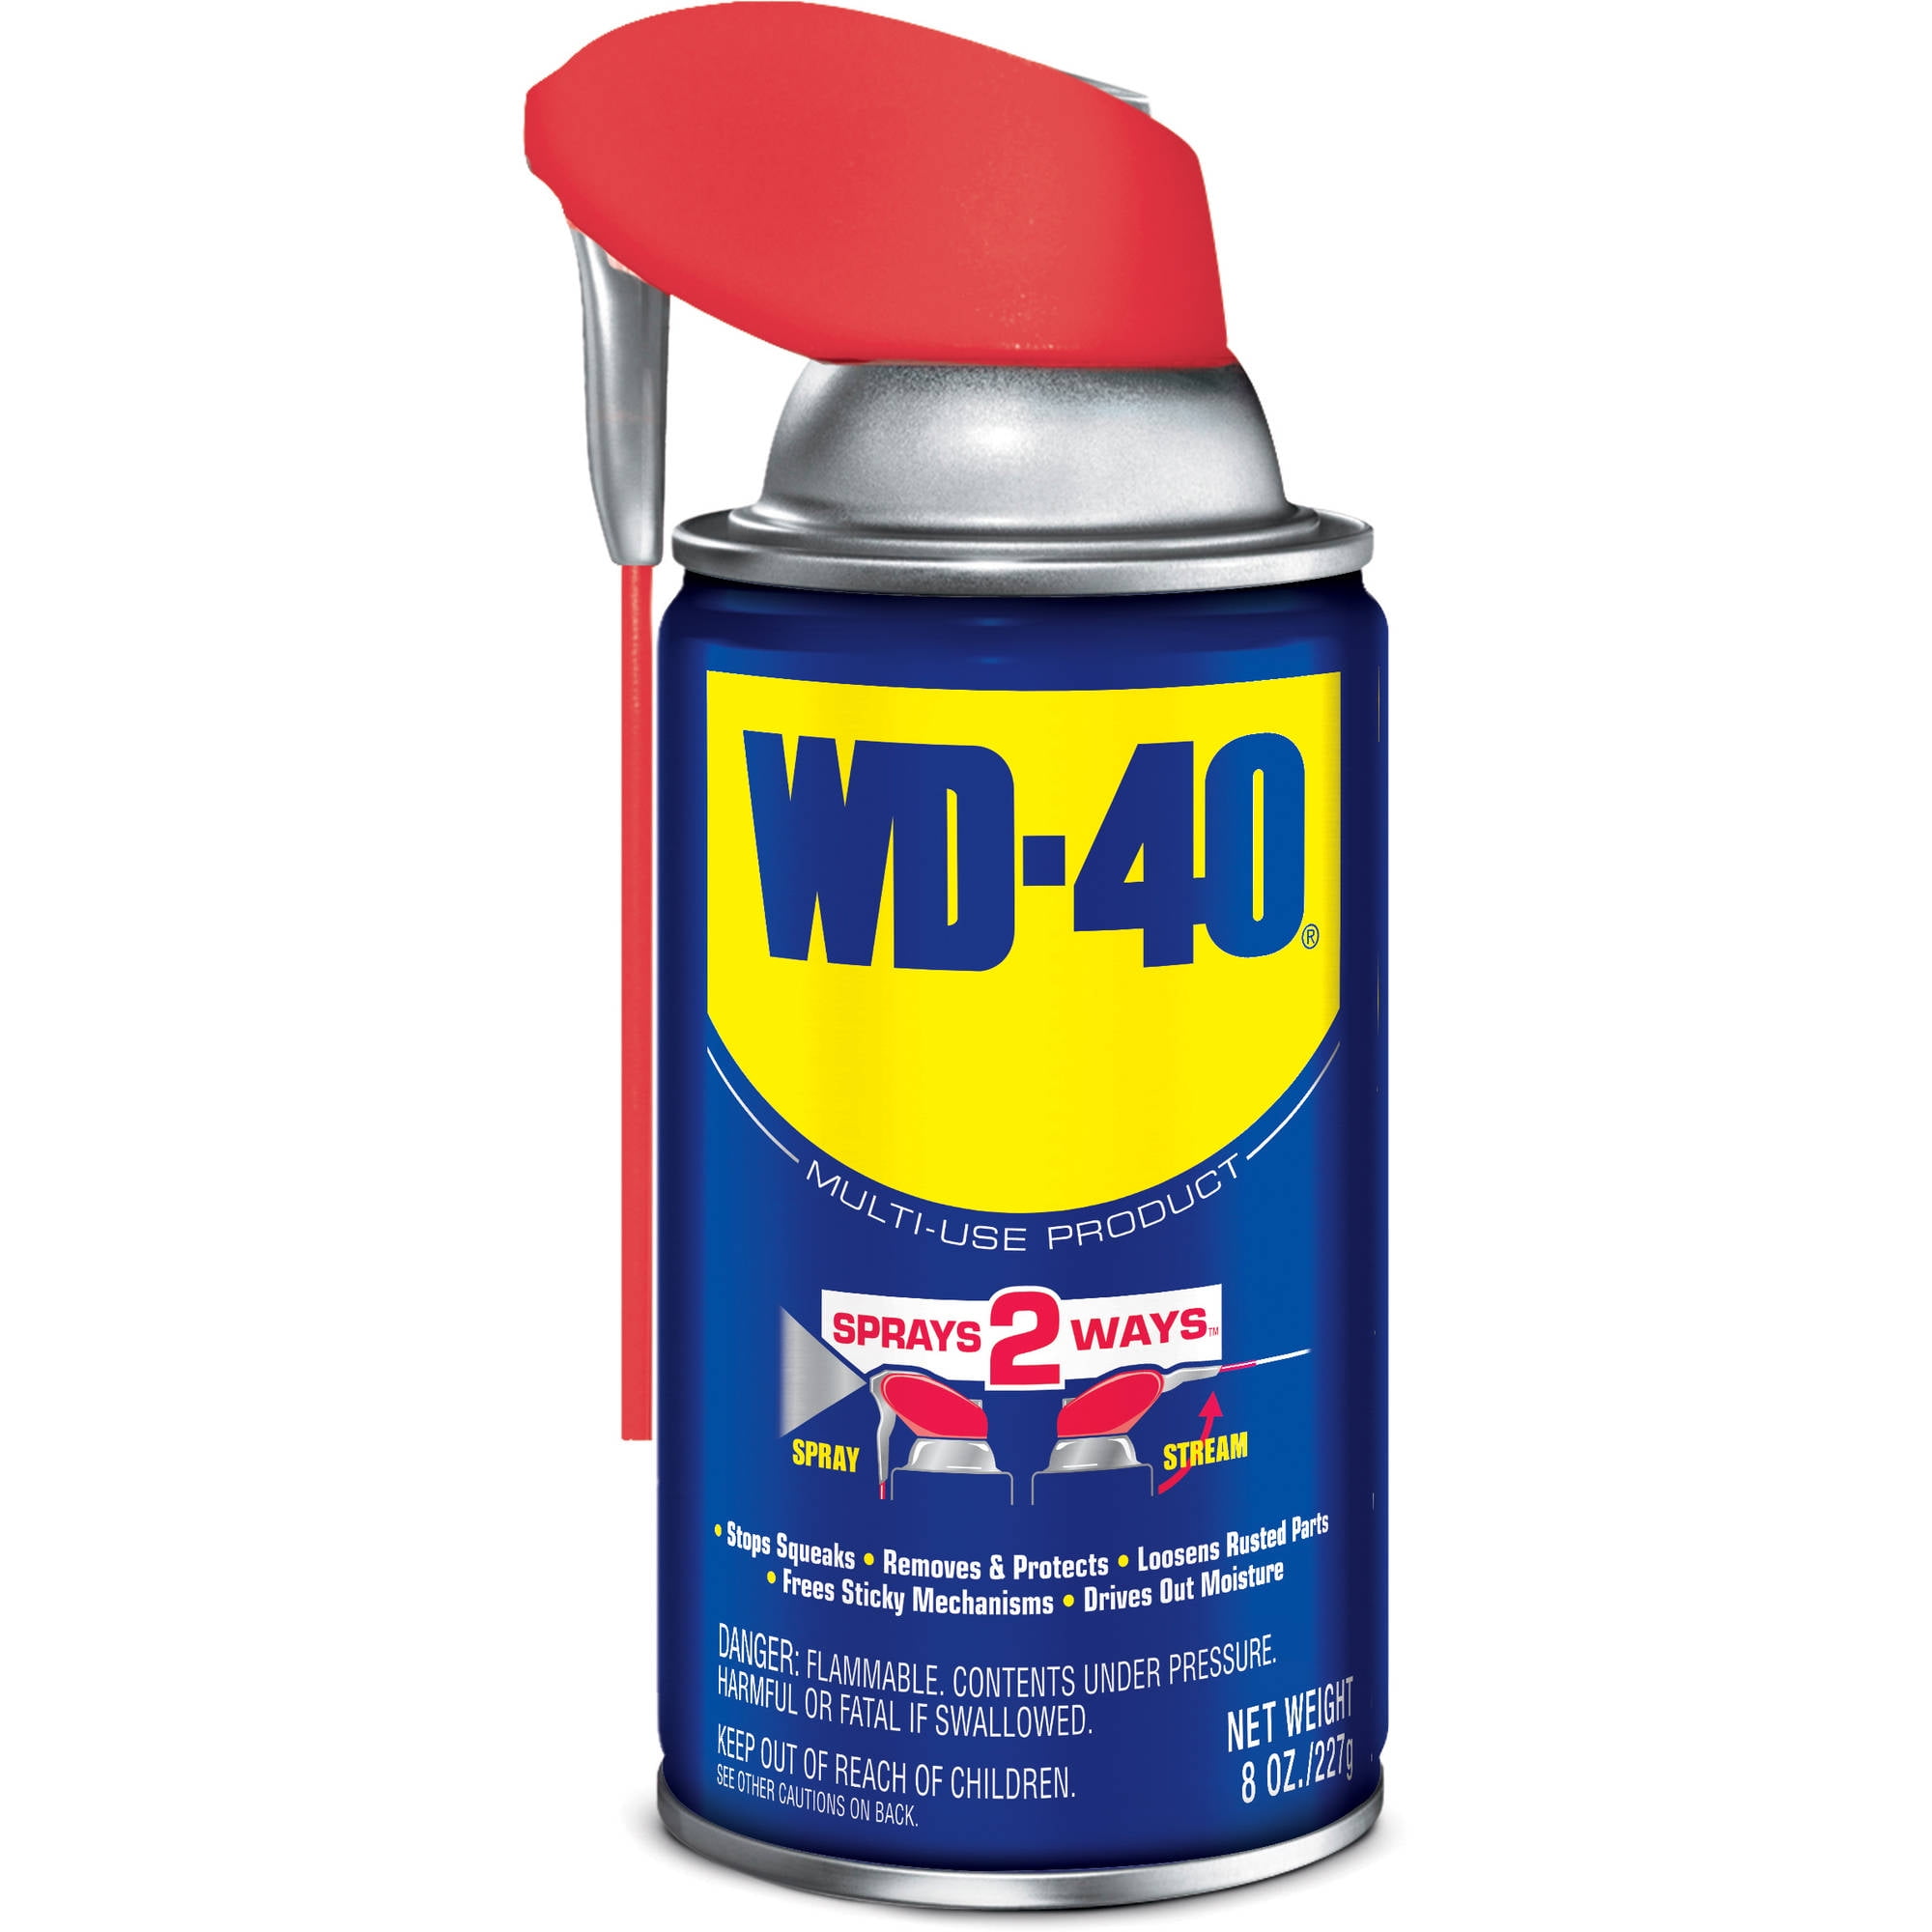 Original Wd 40 Formula Multi Use Product With Smart Straw Sprays 2